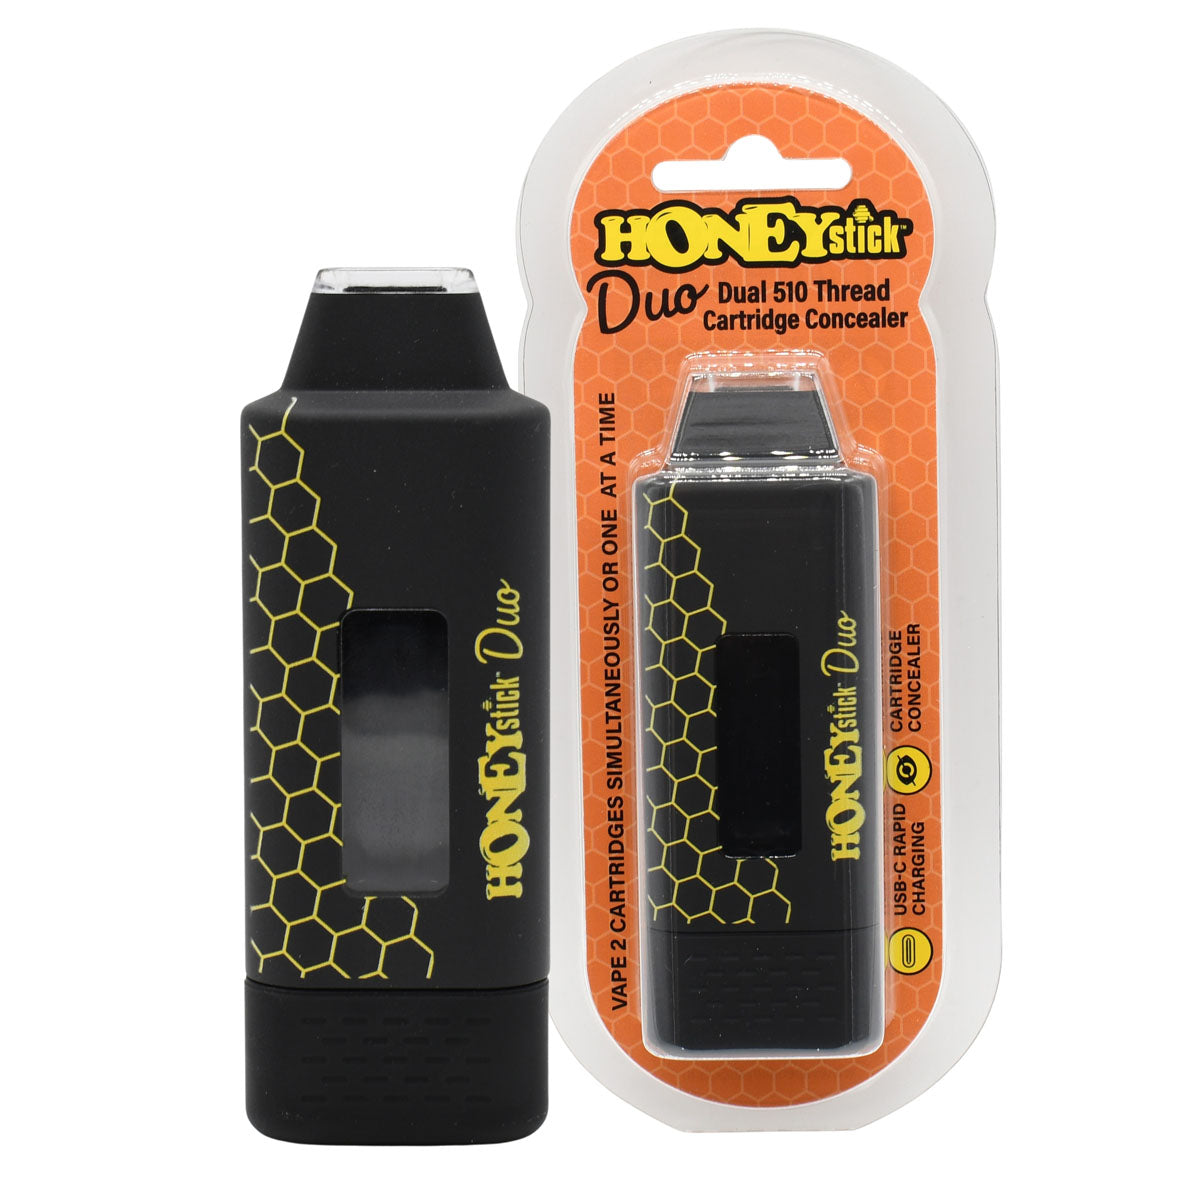 HoneyStick DUO Cartridge Vape - Autodraw Dual 510 Cart Battery